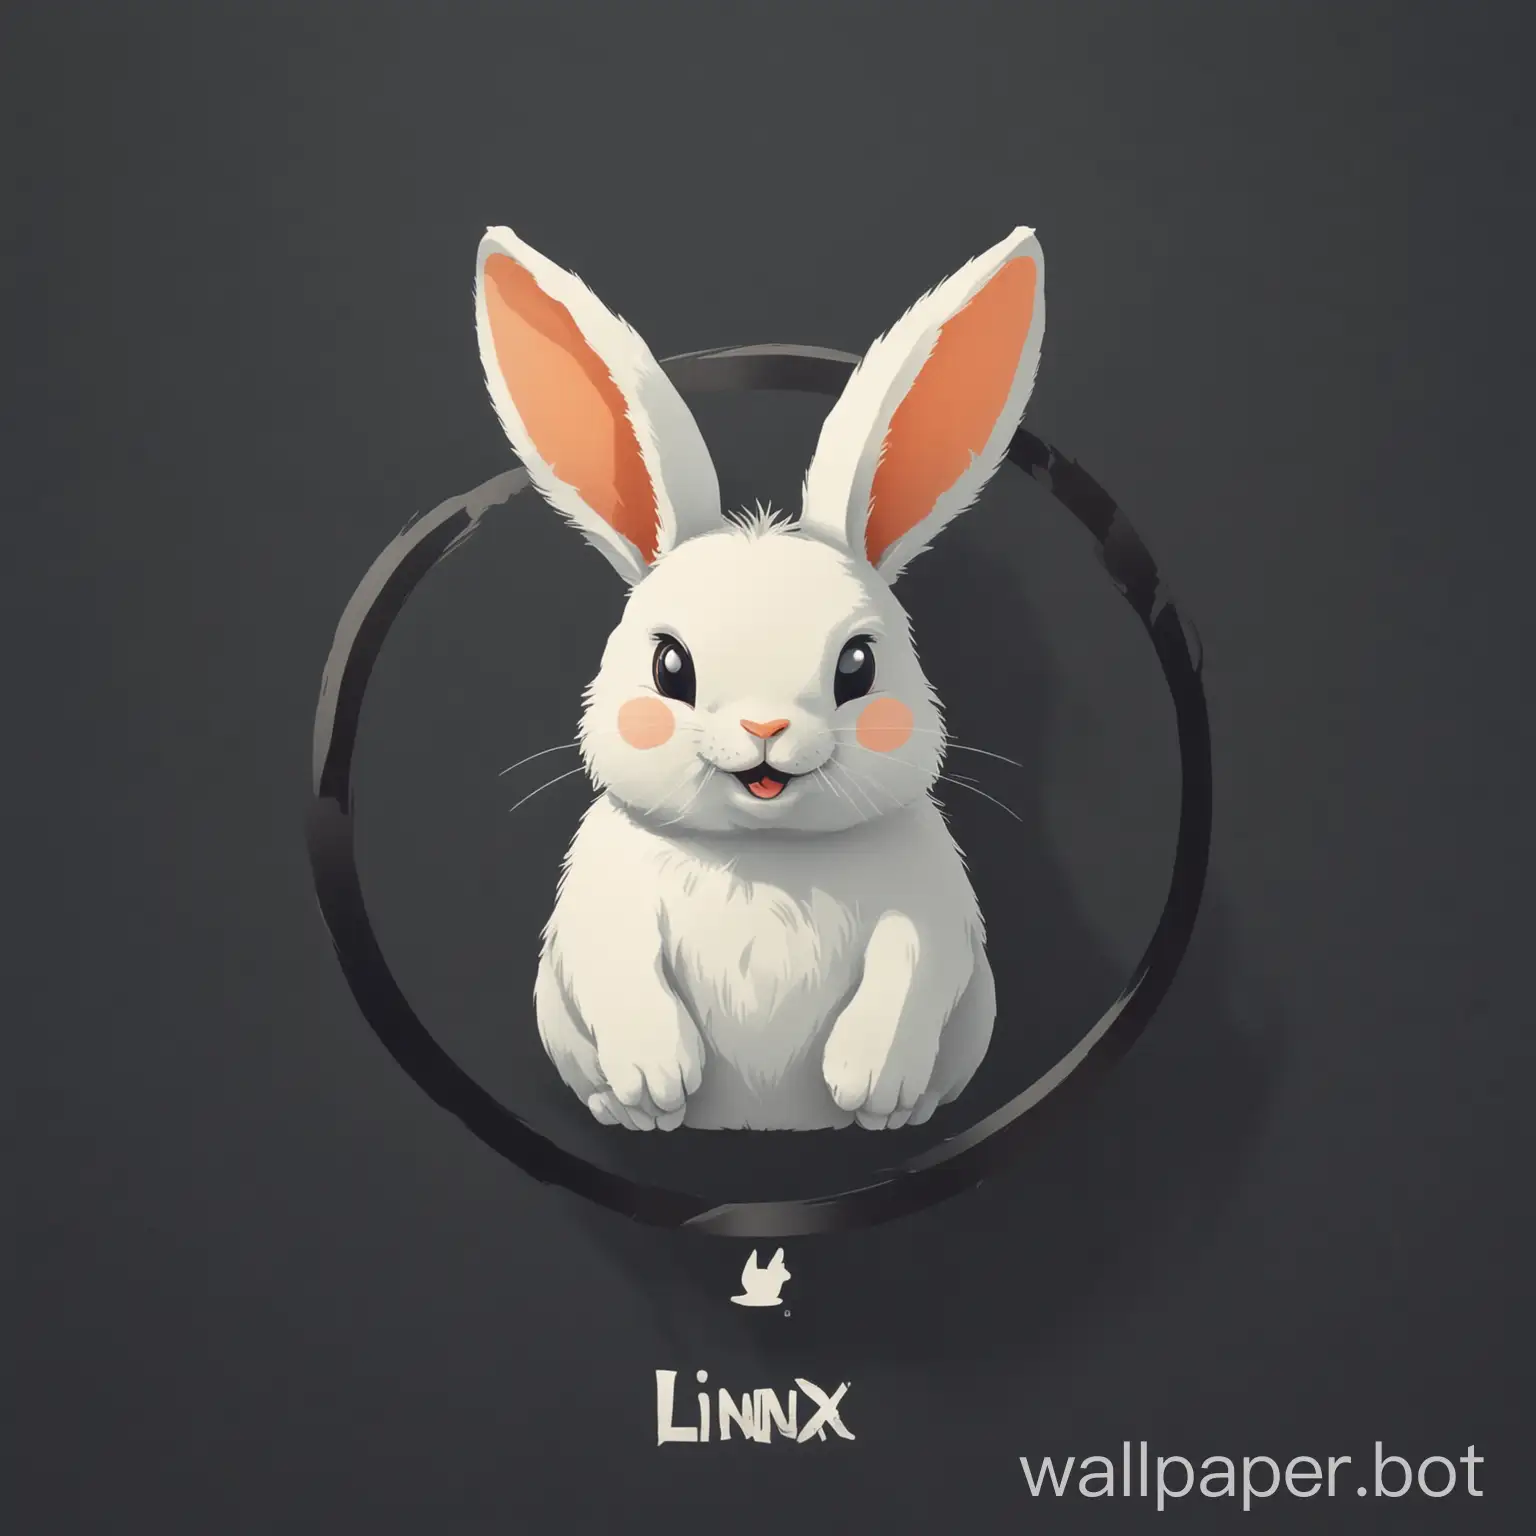 Linux-Distro-Logo-Design-Featuring-a-Rabbit